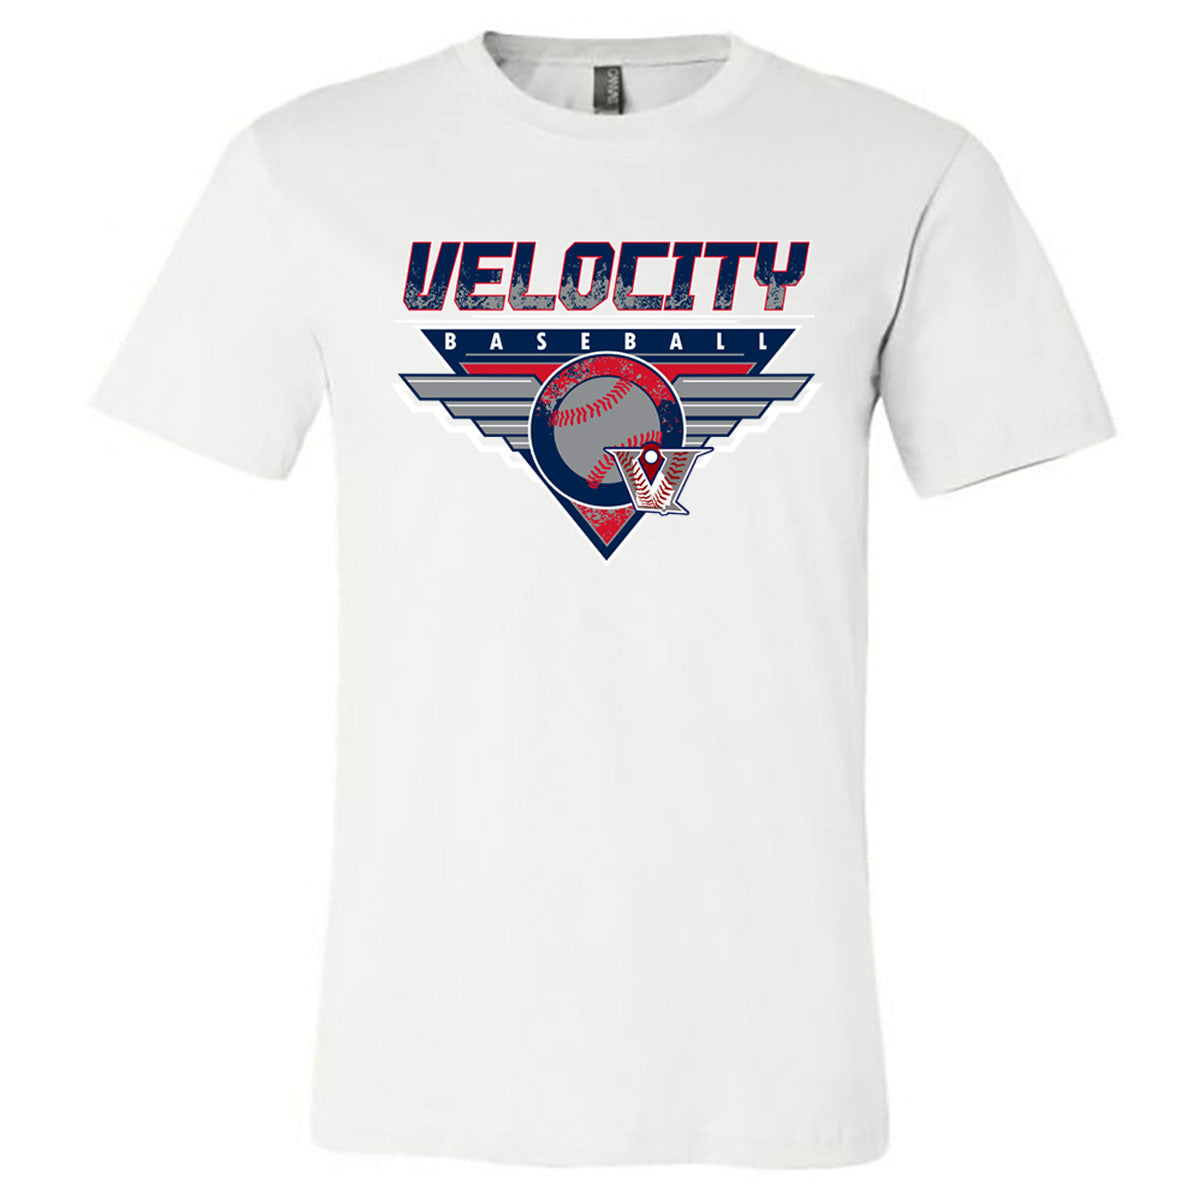 Velo BB - Velocity Baseball Triangle - White (Tee/Hoodie/Sweatshirt) - Southern Grace Creations